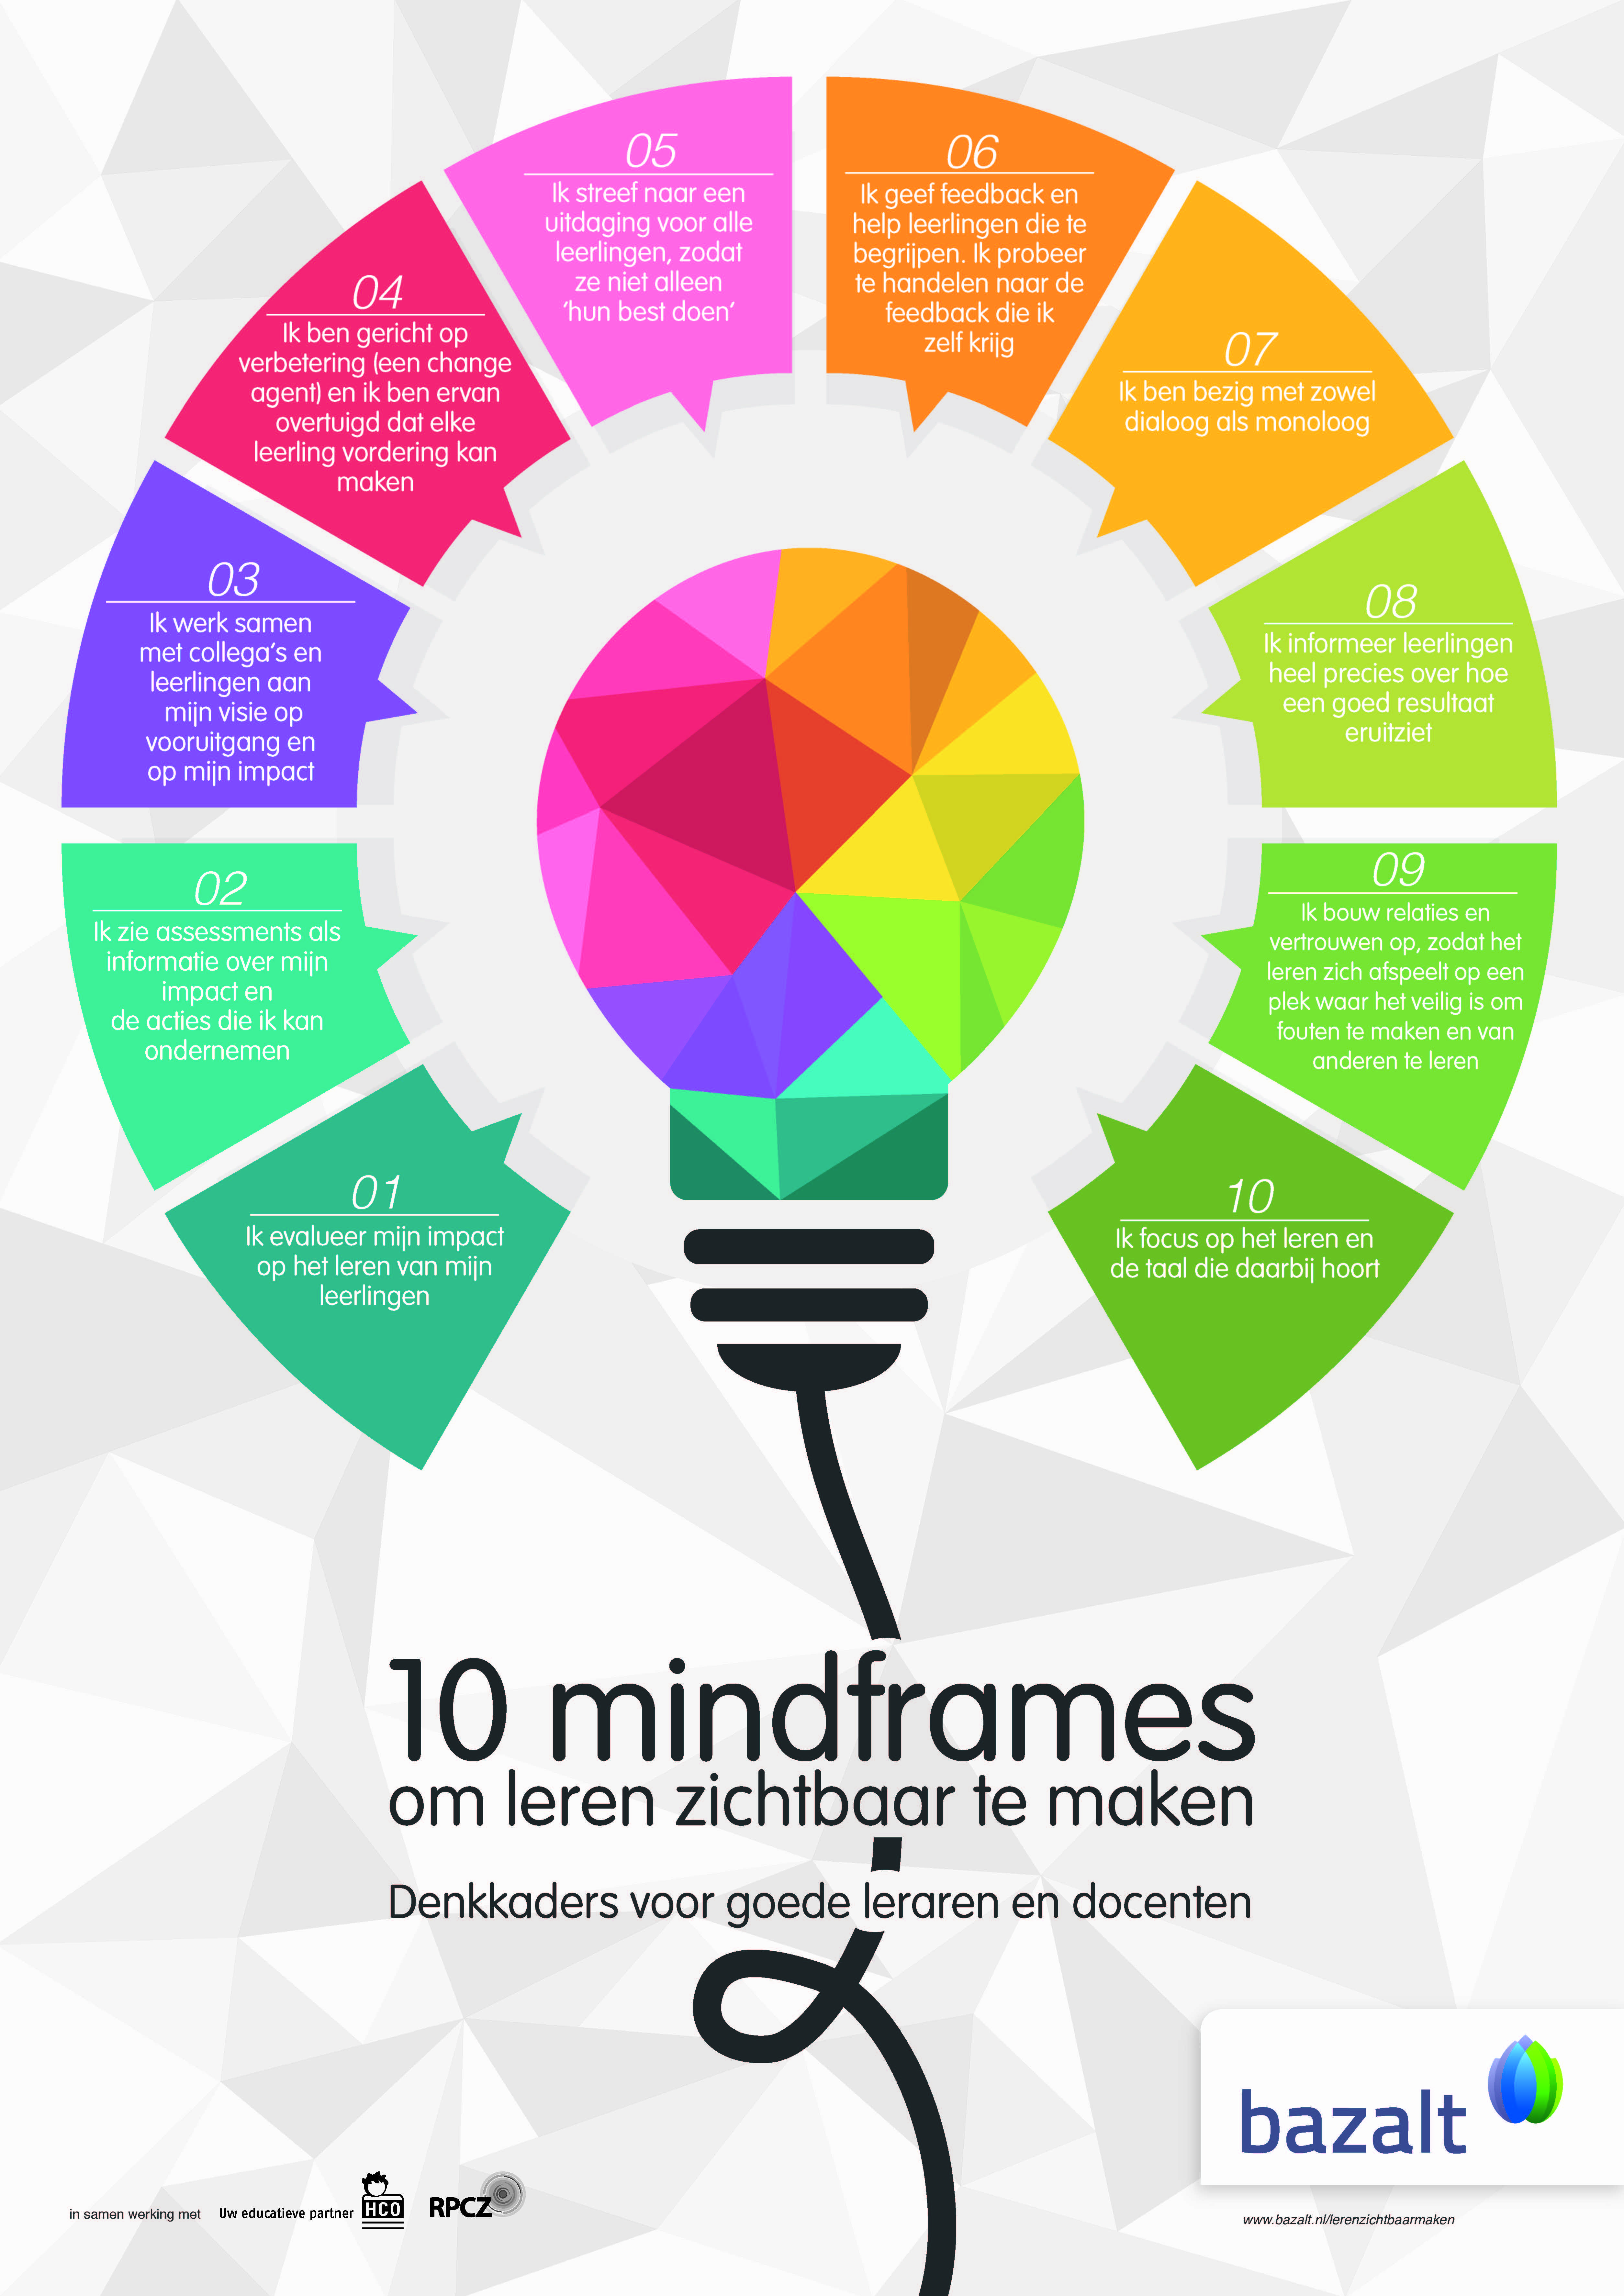 10 mindframes for visible learning